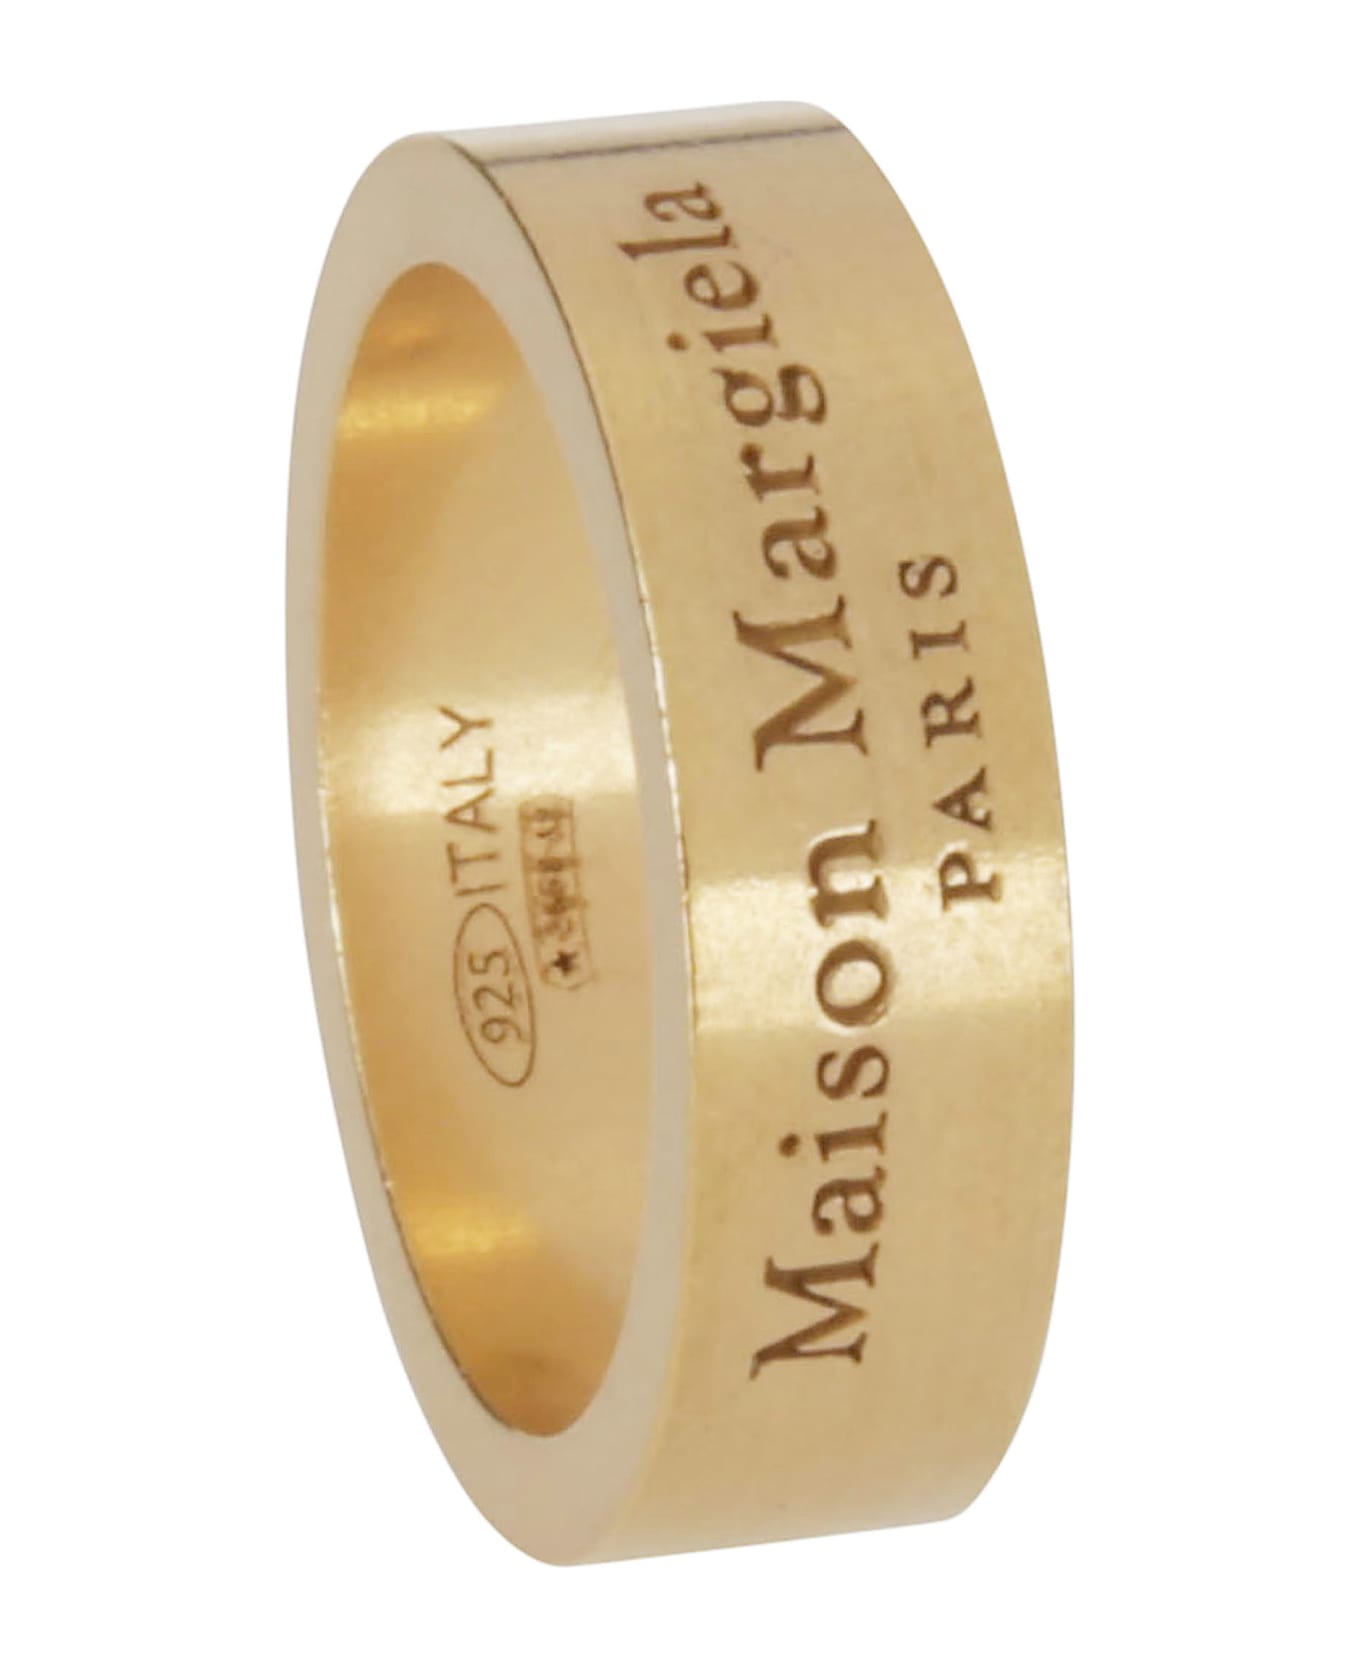 Maison Margiela Ring - YELLOW GOLD PLATING BURATTATO リング